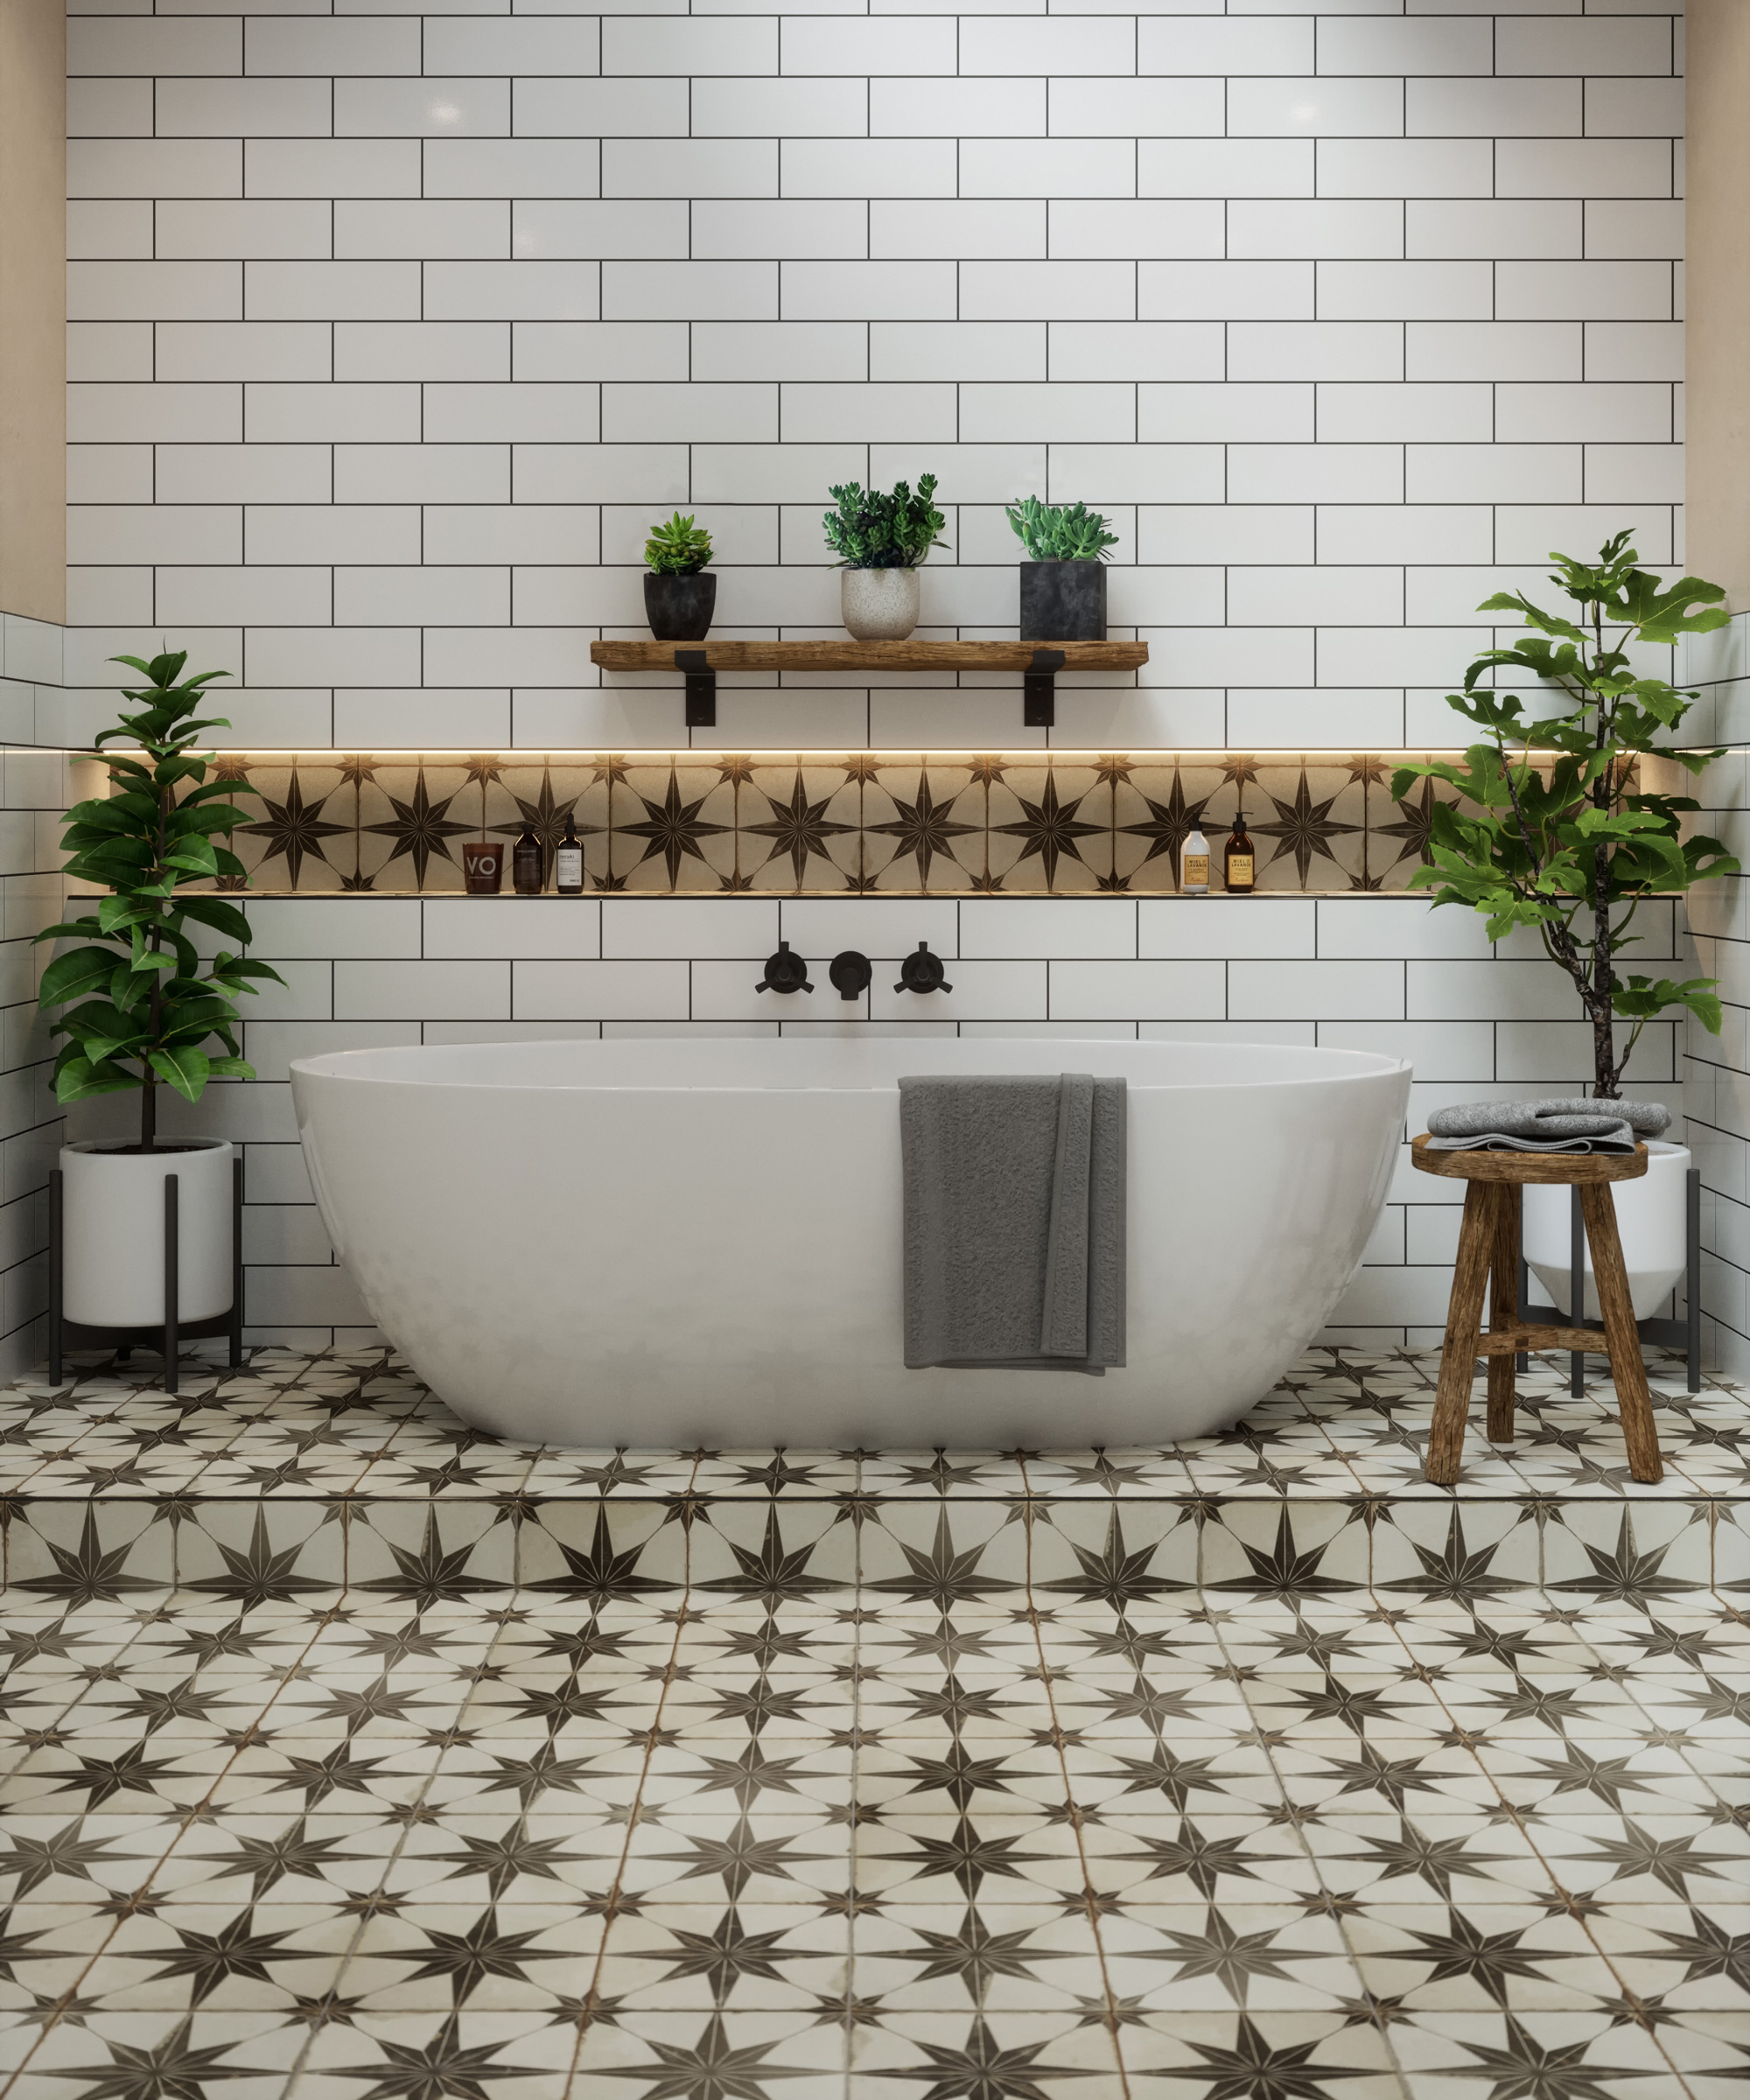 Bathroom Tile Ideas 32 New Looks To, What Size Hexagon Tile For Small Bathroom Floor